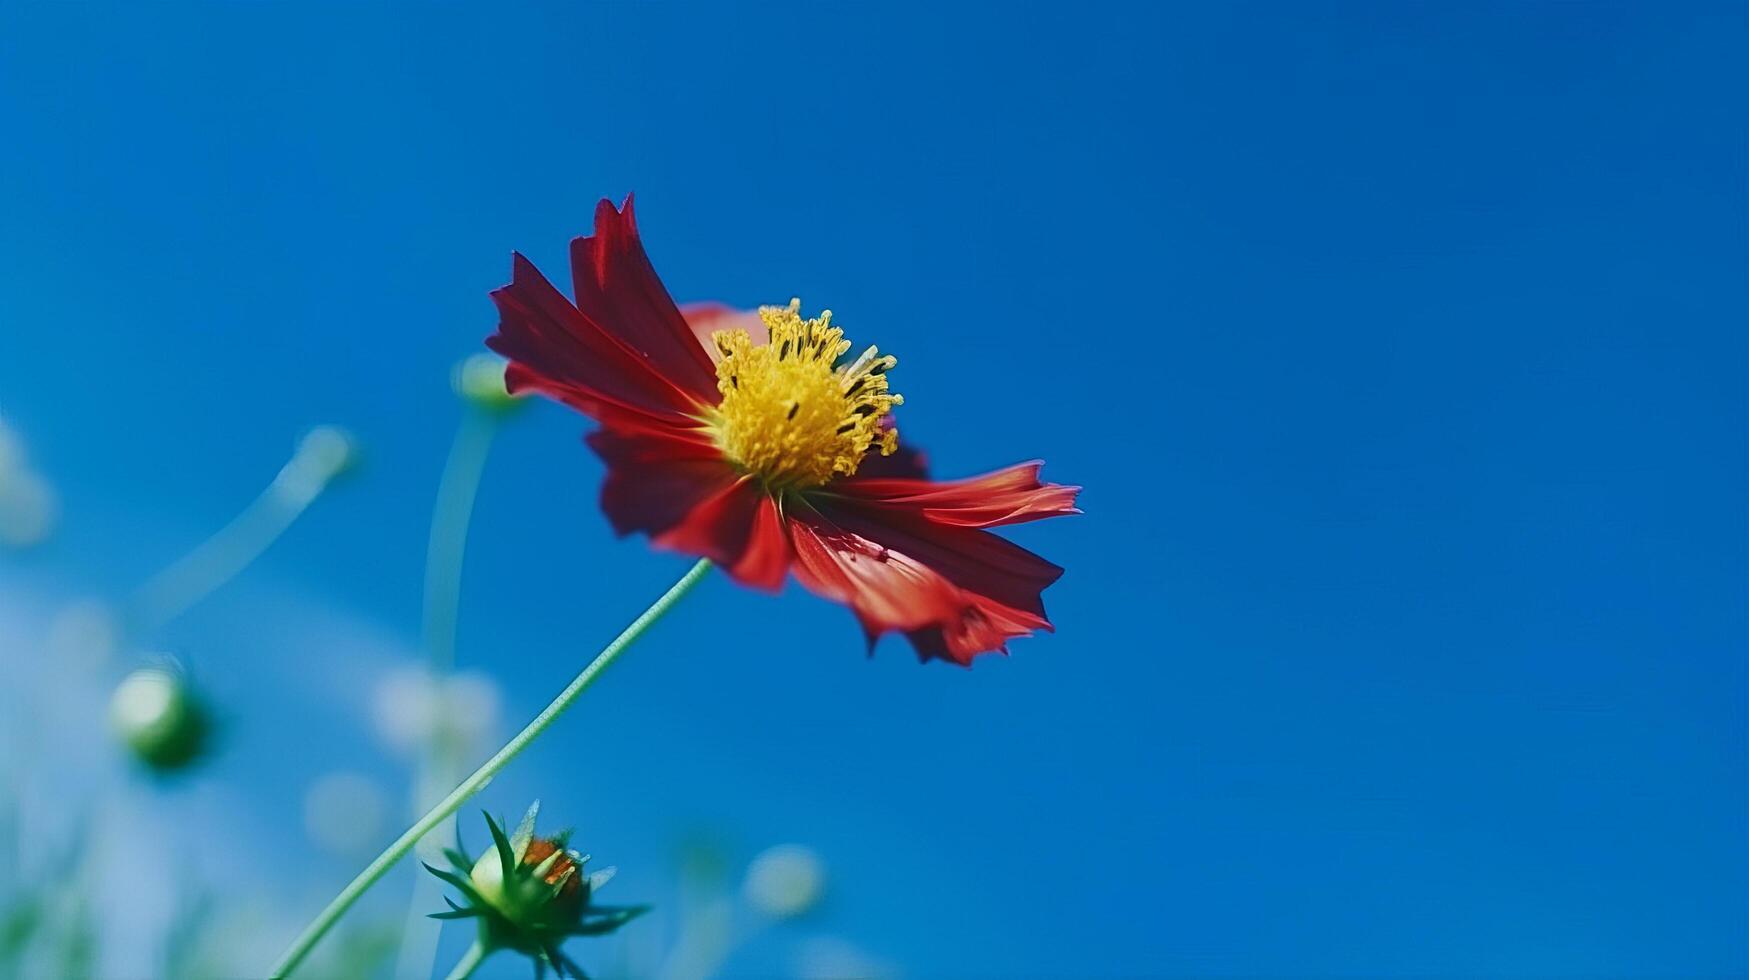 Cosmos flower over sky background. Illustration photo